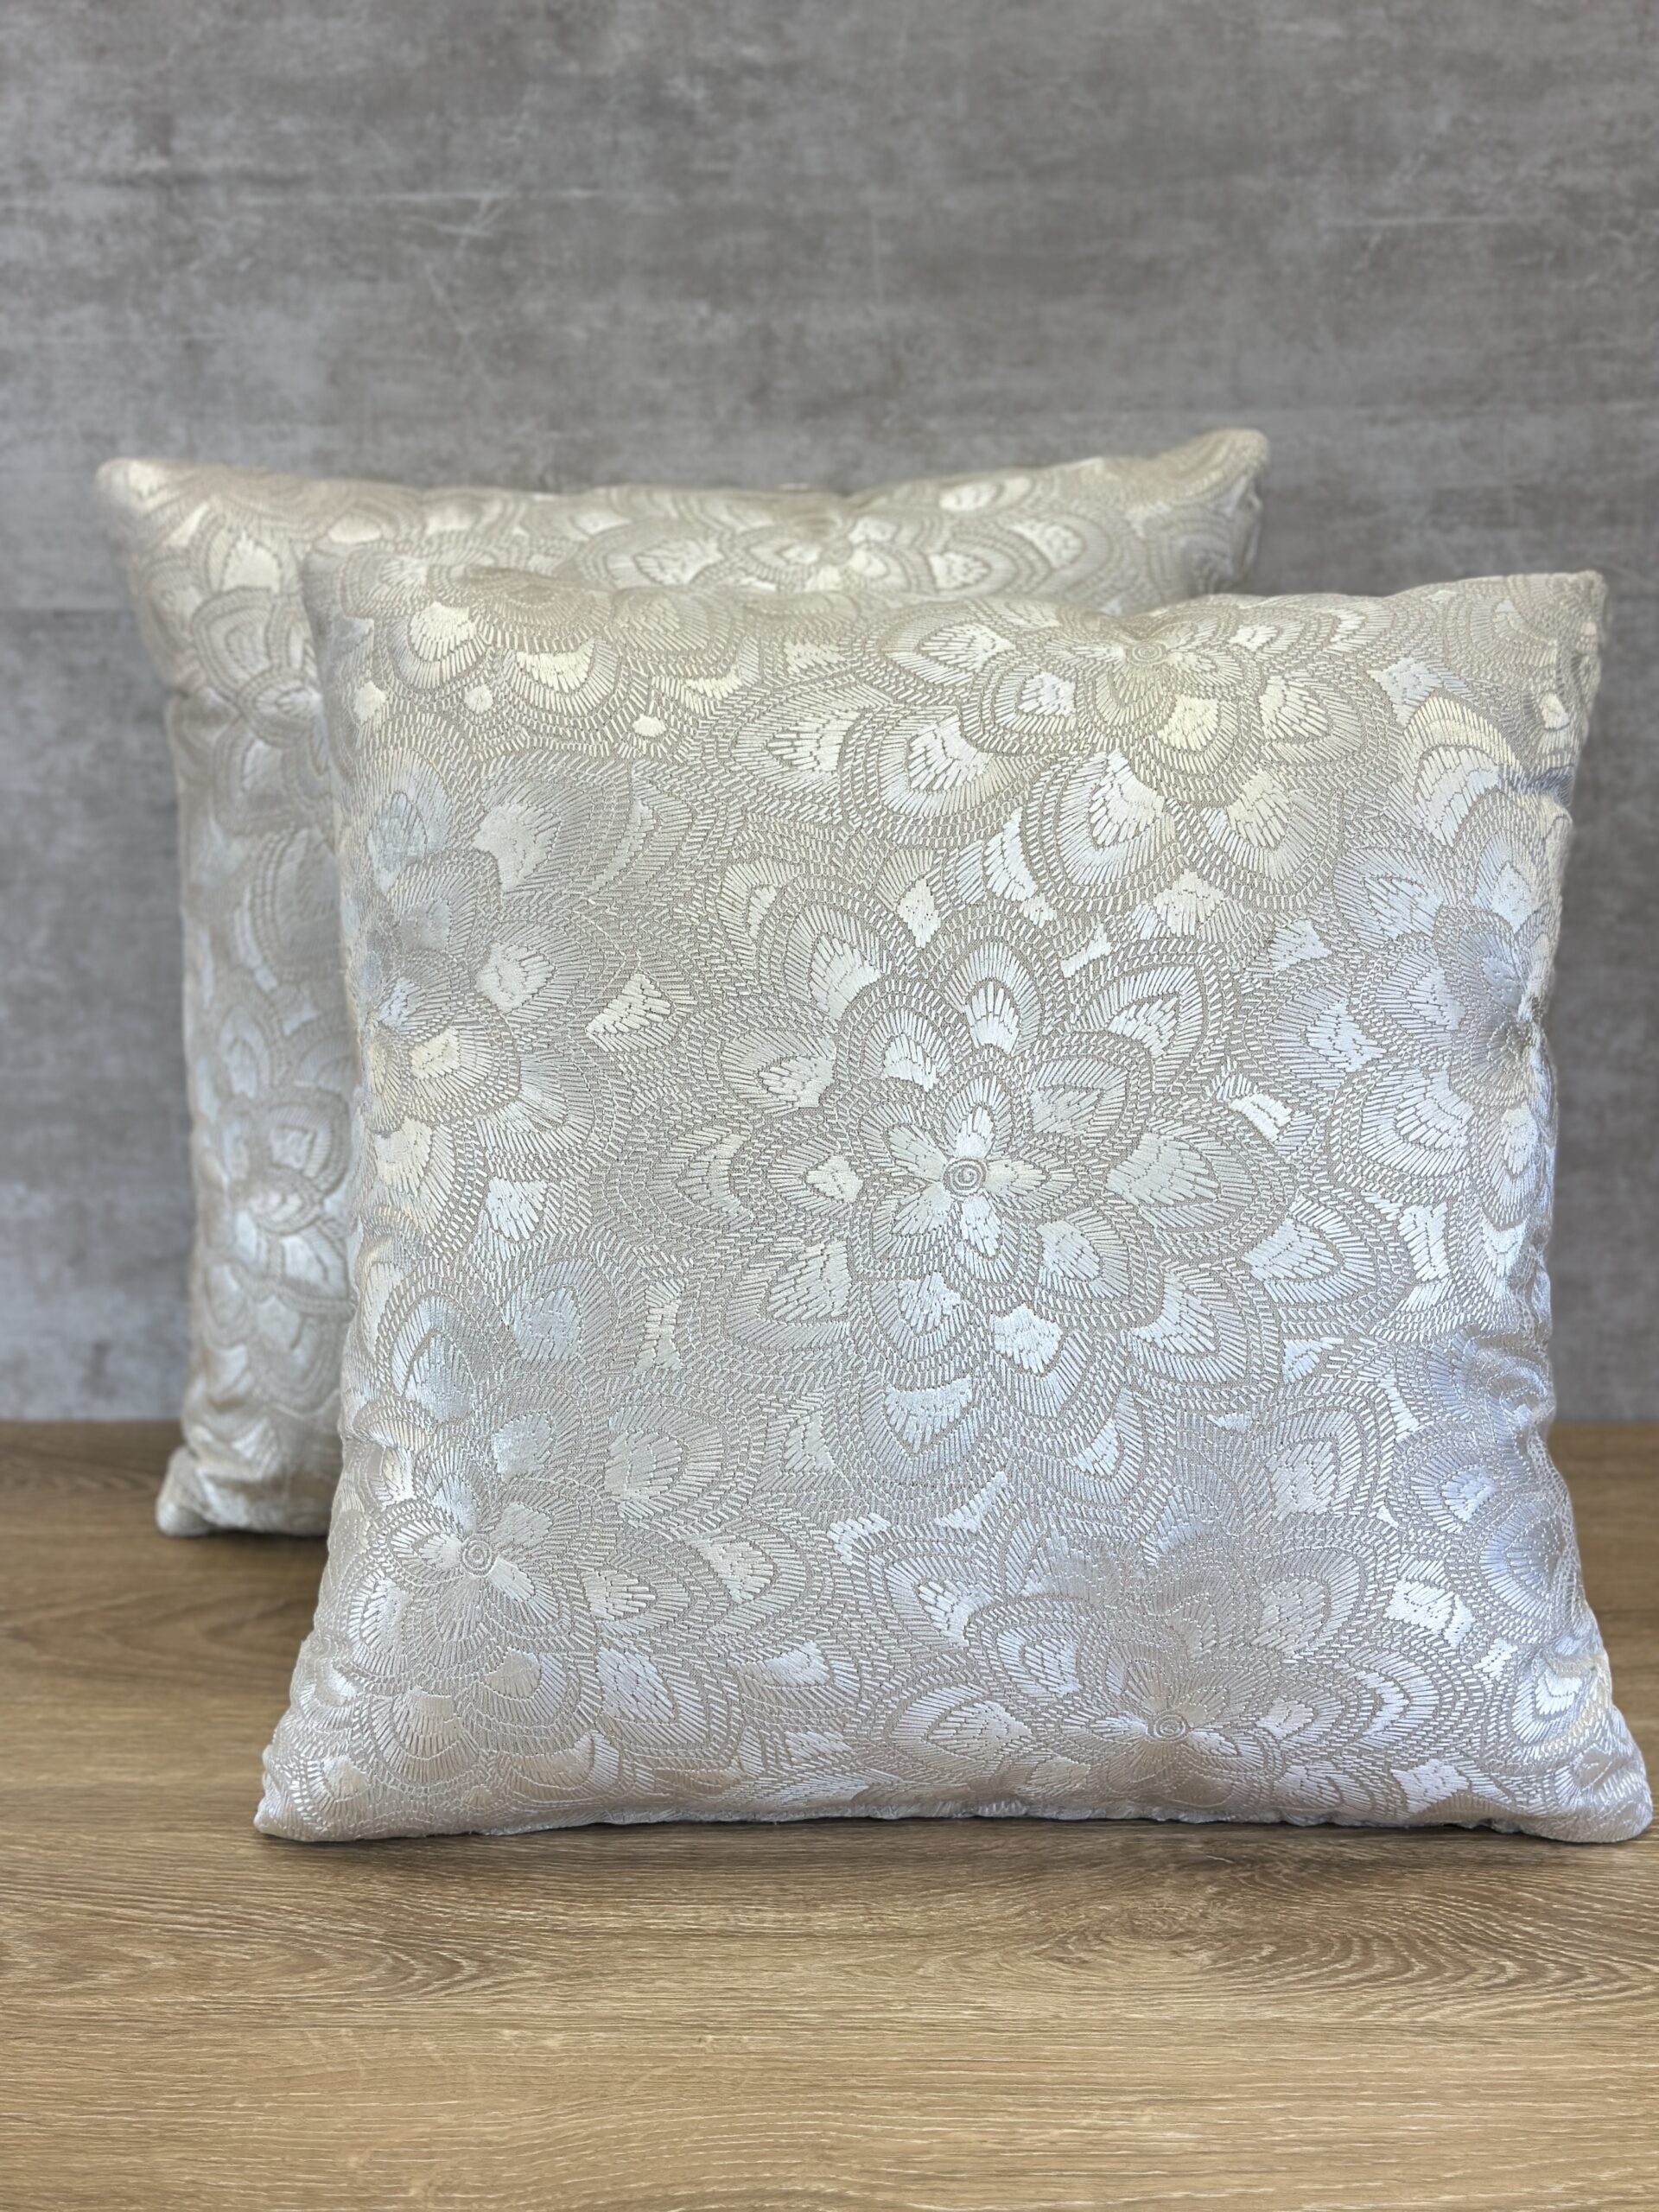 Schumacher Lotus Embroidery Pillows